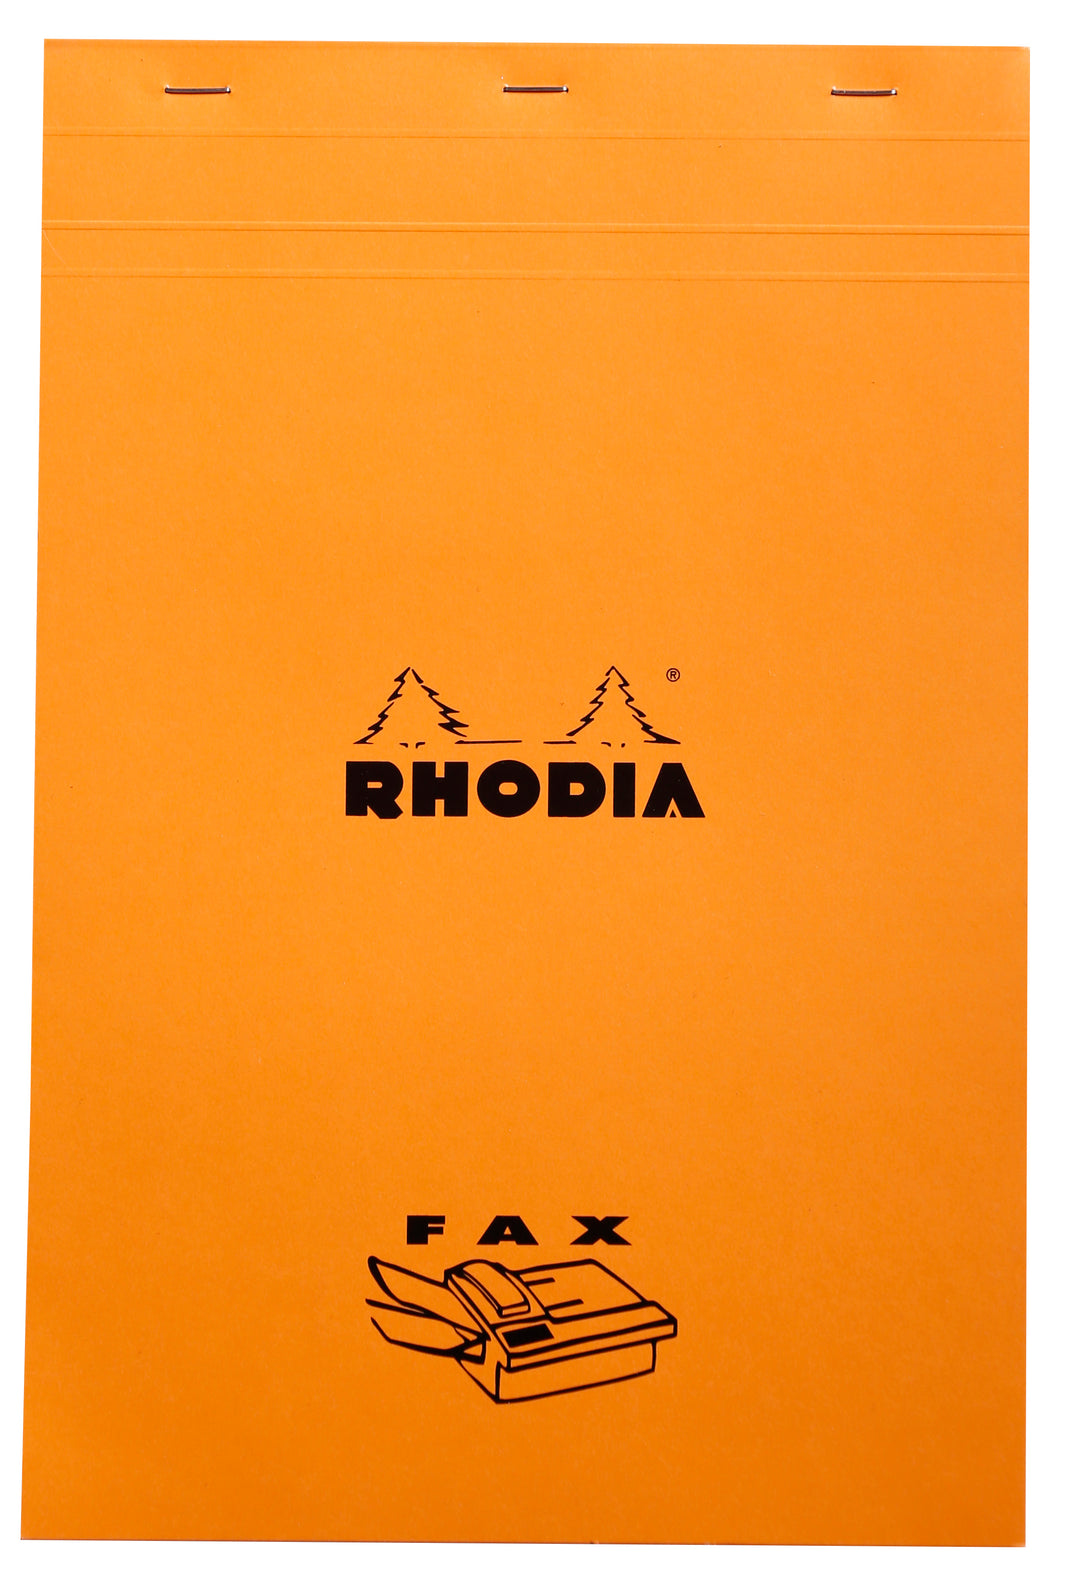 Rhodia Basics Pre-Printed Fax Notepad - No. 191 - A4+